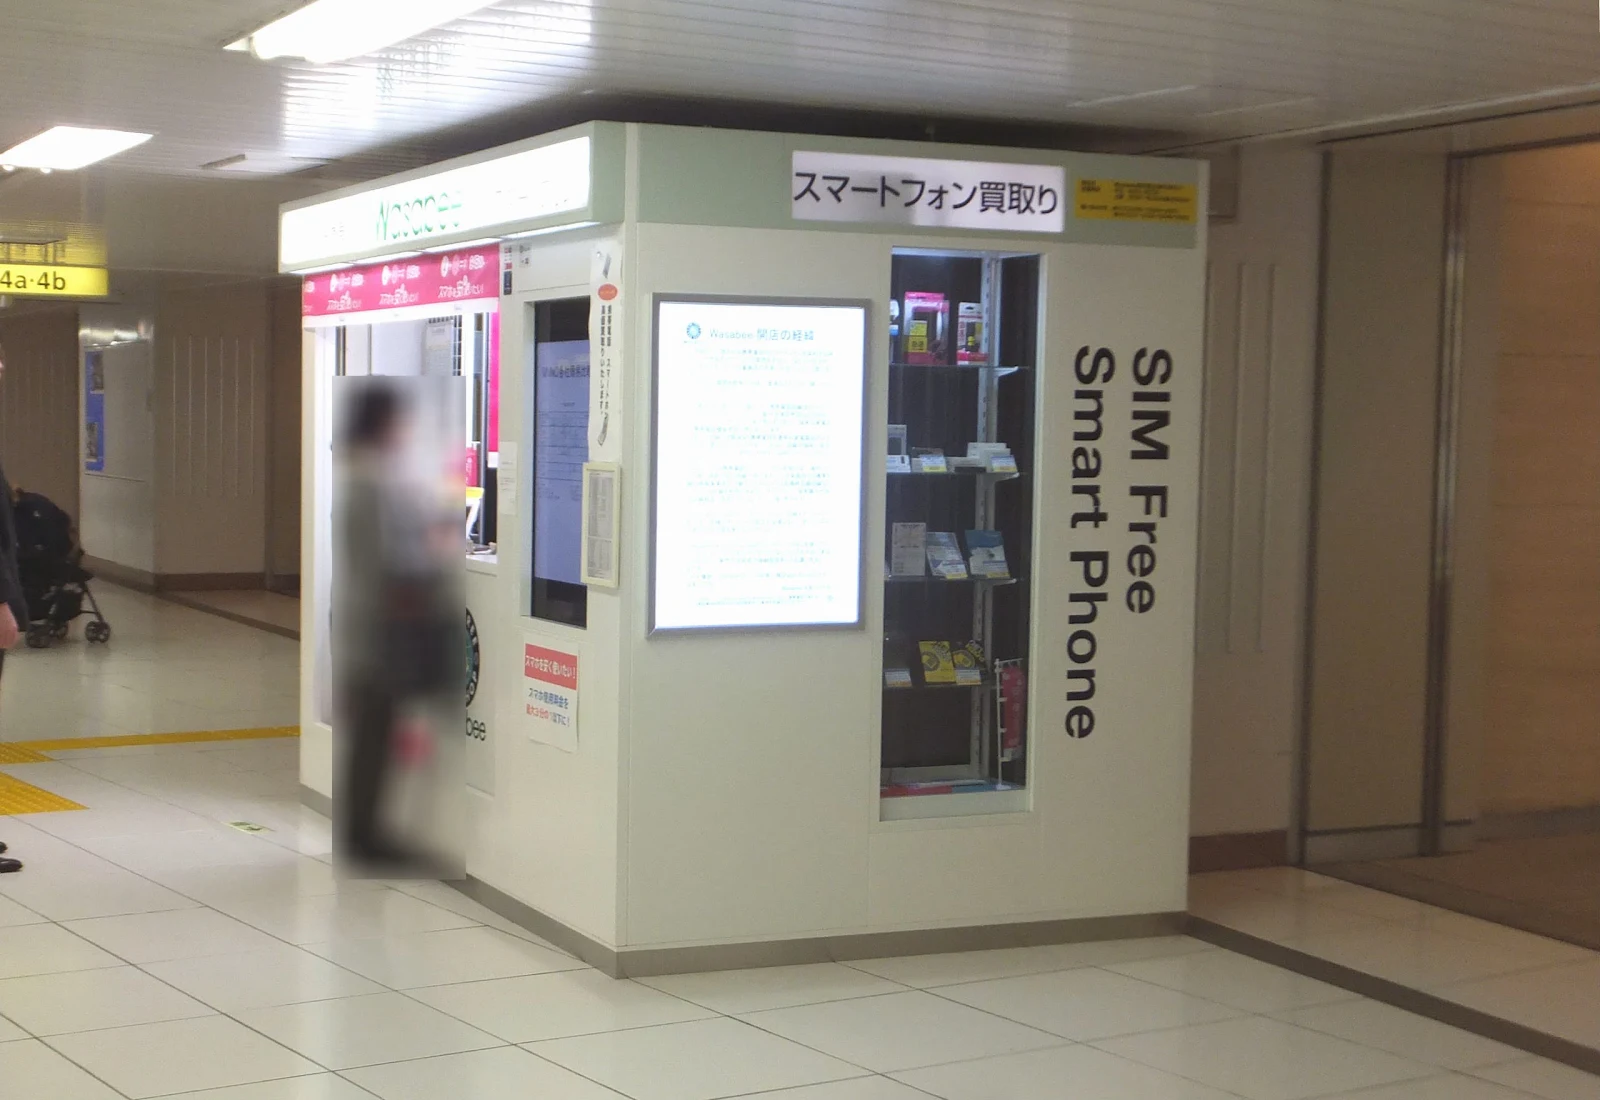 Wasabee-shop-tokyo-station 東京駅Wasabee